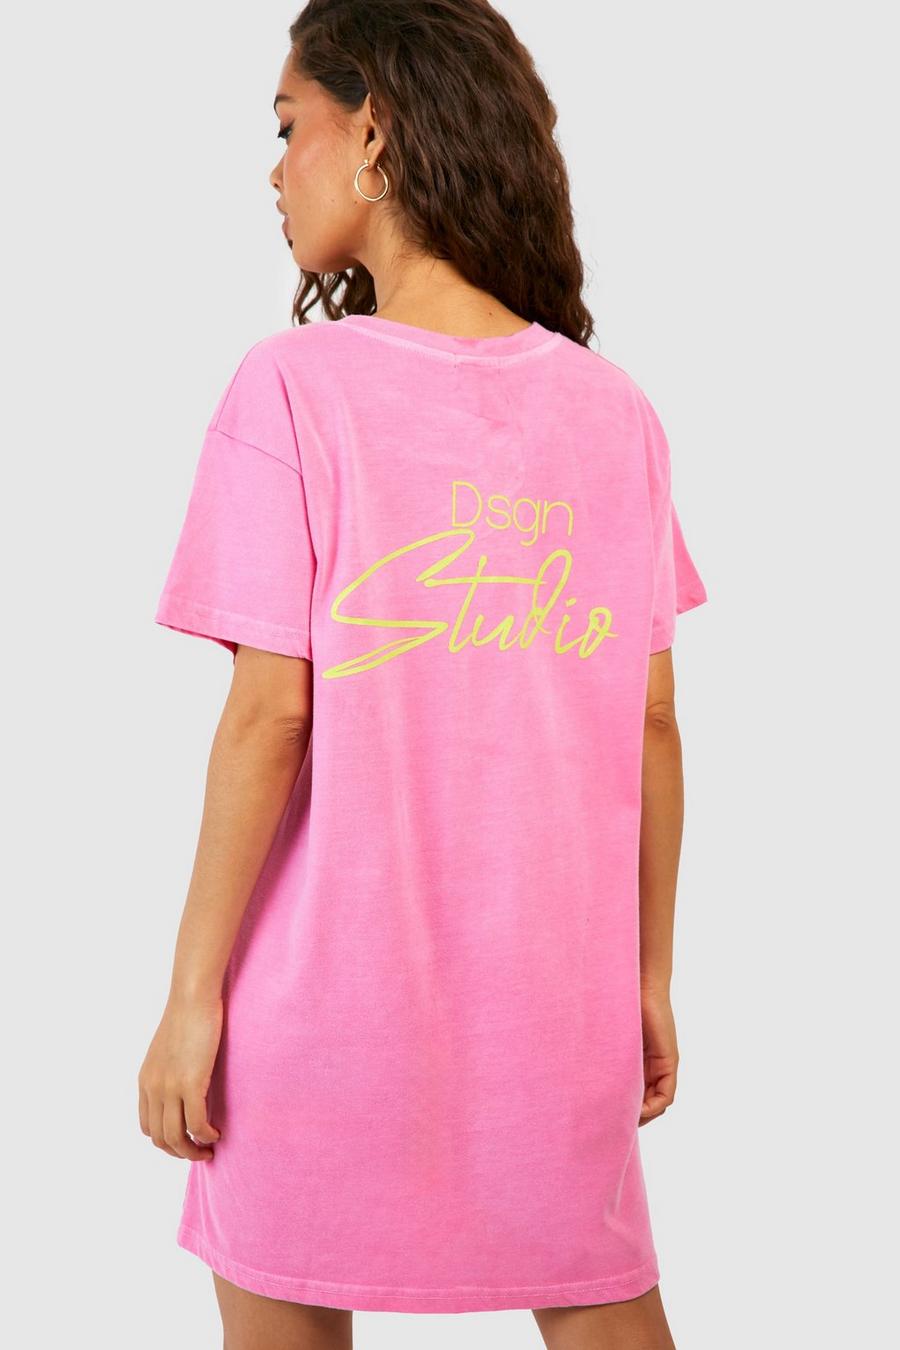 Vestido camiseta oversize Design Studio, Hot pink